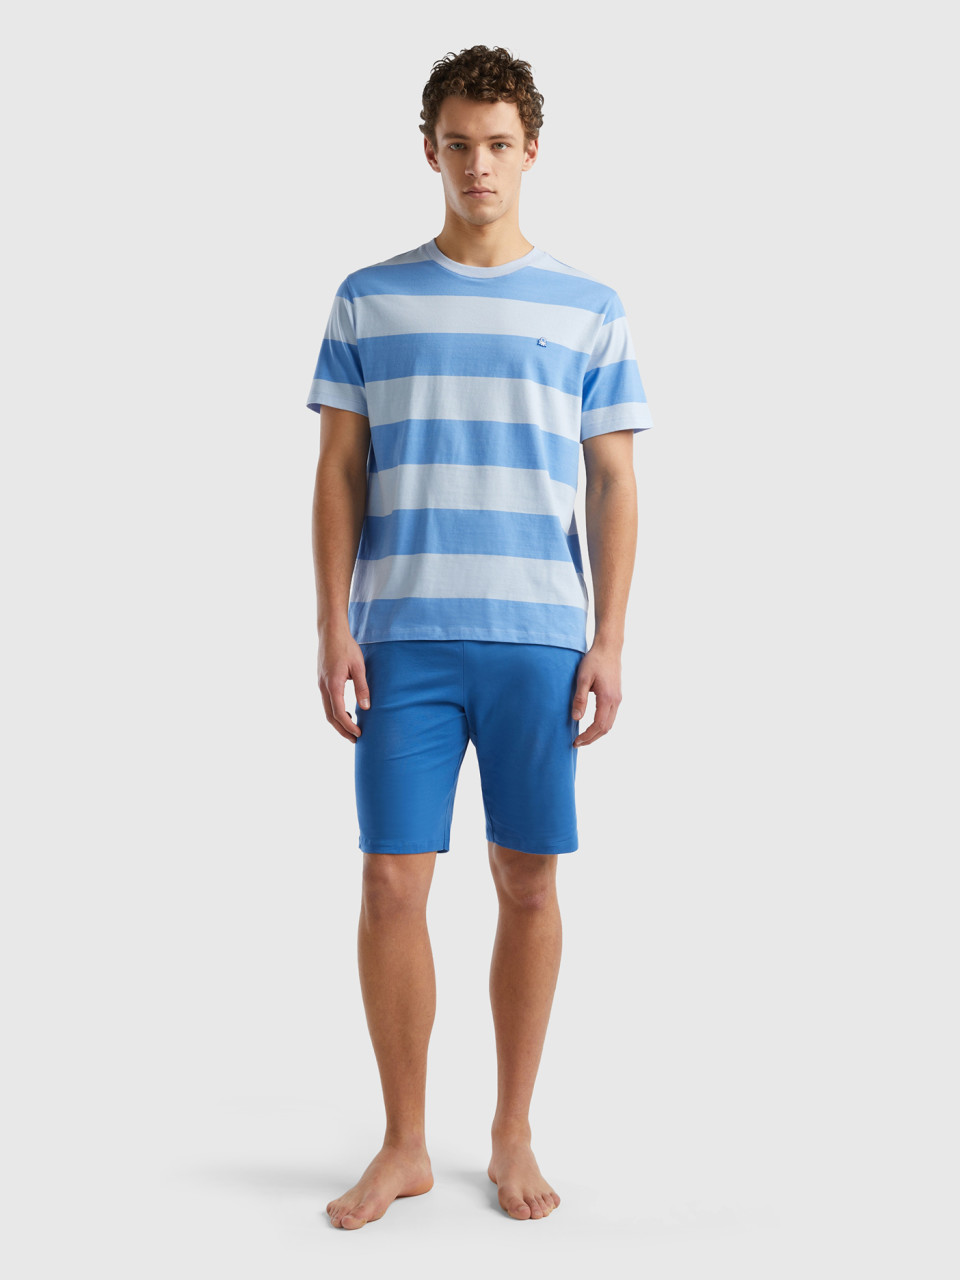 Benetton, Pyjama Mit Gestreiften T-shirt, Azurblau, male